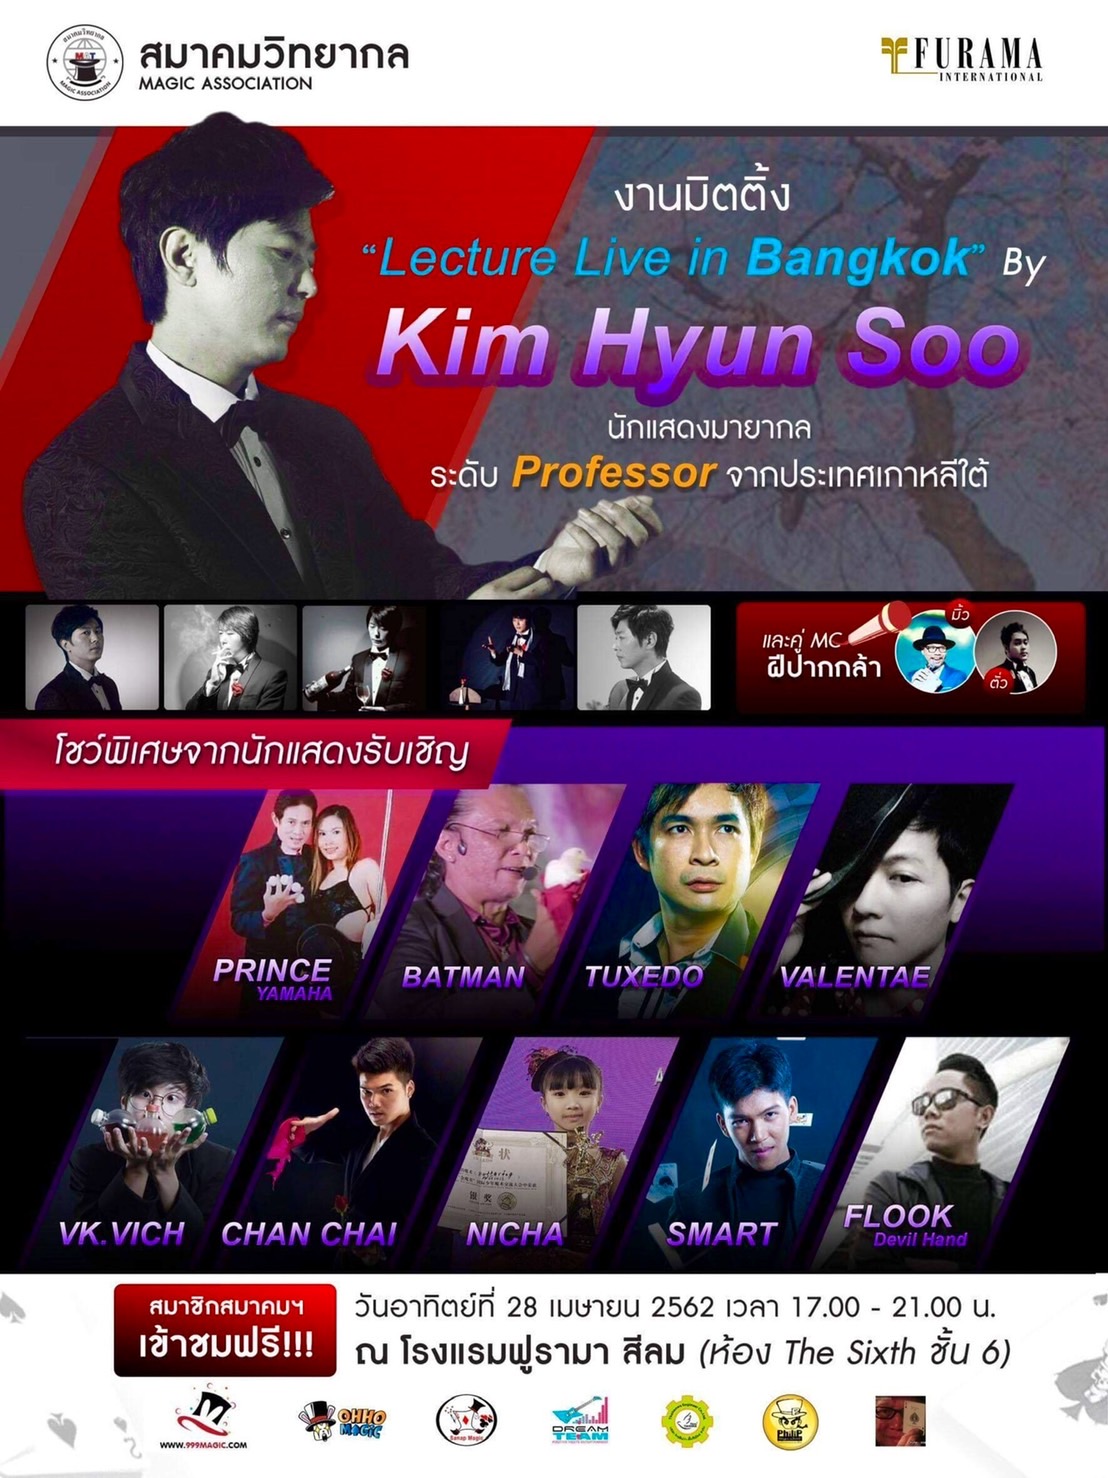 VK.Vich Vichayut Kanungchoti วิชยุตม์ คนึงโชติ มายากล รับแสดงมายากล Magic Class รับสอนมายากล มายากลเวที การแสดง Stage Magic แสดงวันเด็ก วันปีใหม่ ละครเวที ละครเวทีมายากล Kim Hyun Soo Lecture Live in Bangkok